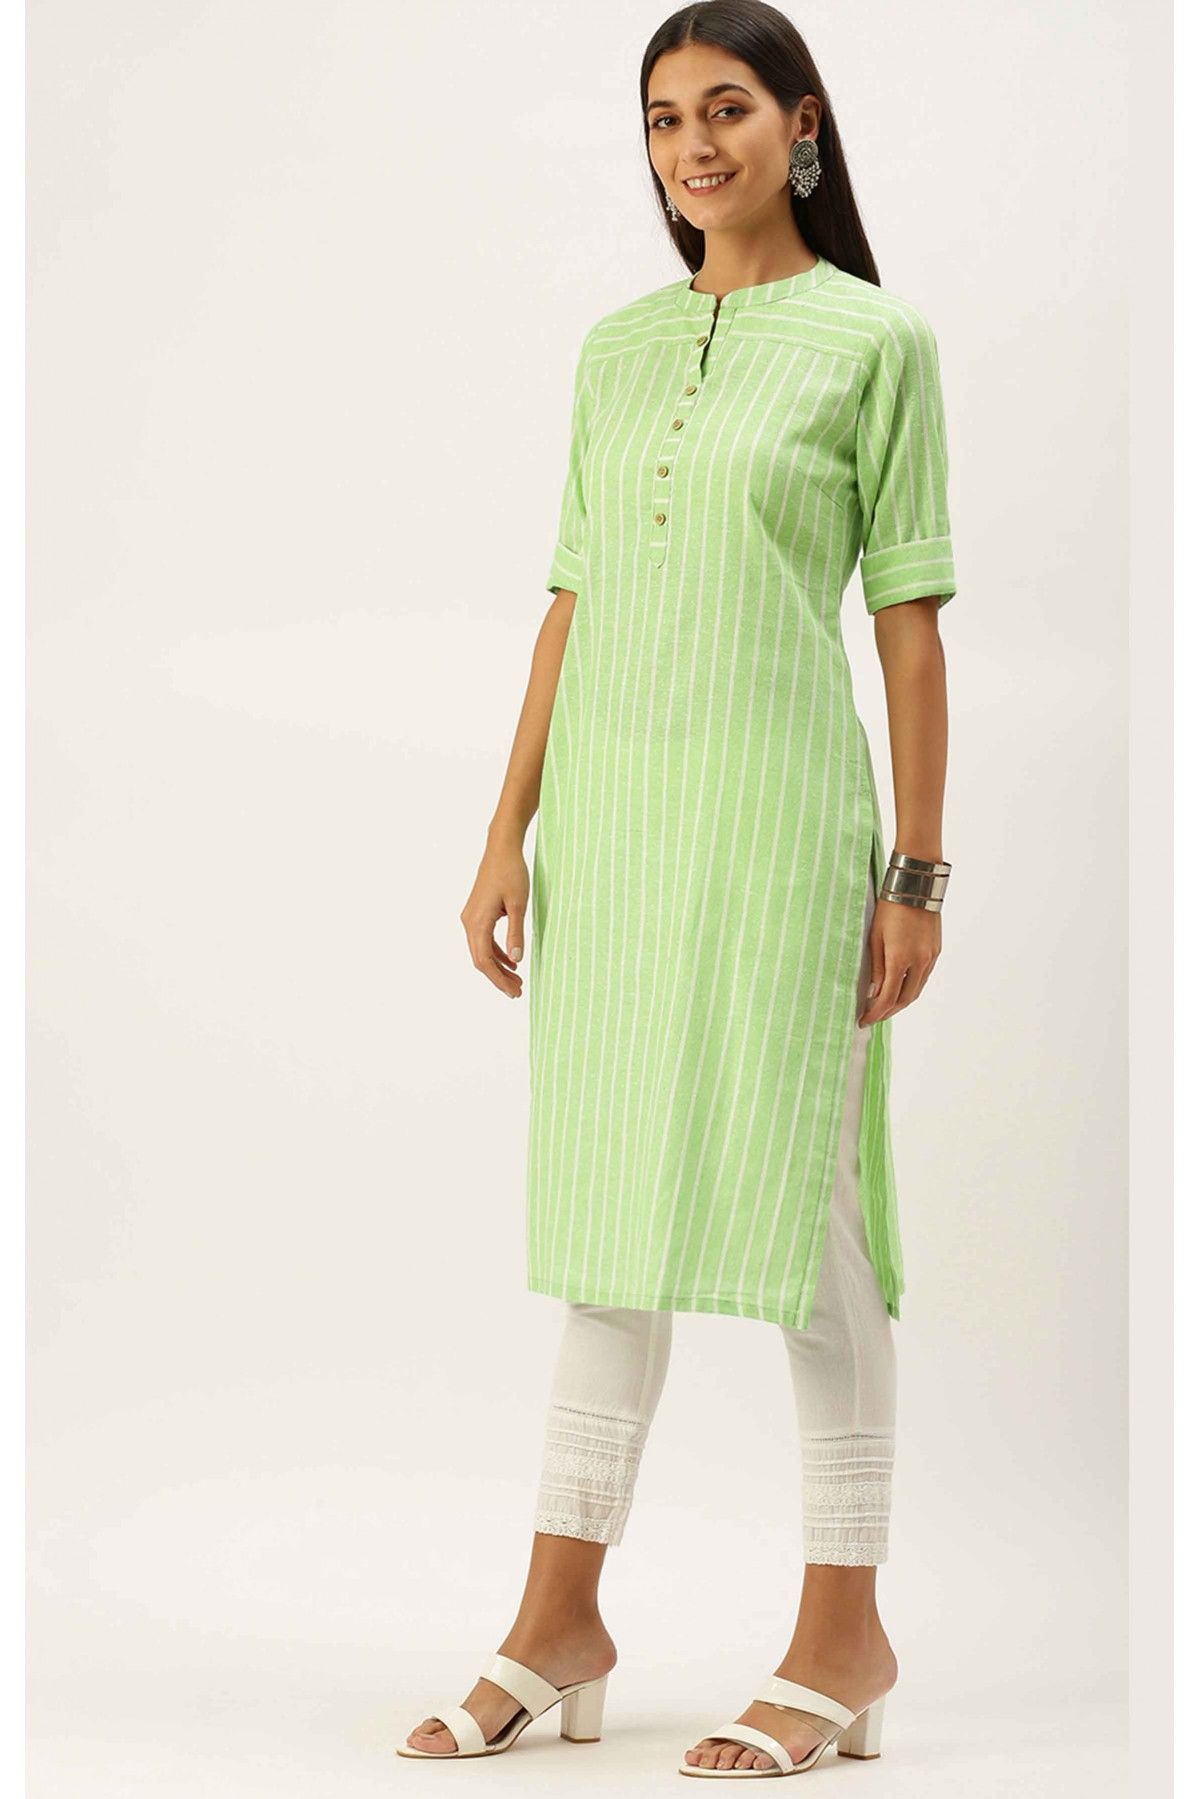 Cotton Casual Wear Kurti In Green Colour - KR5480625